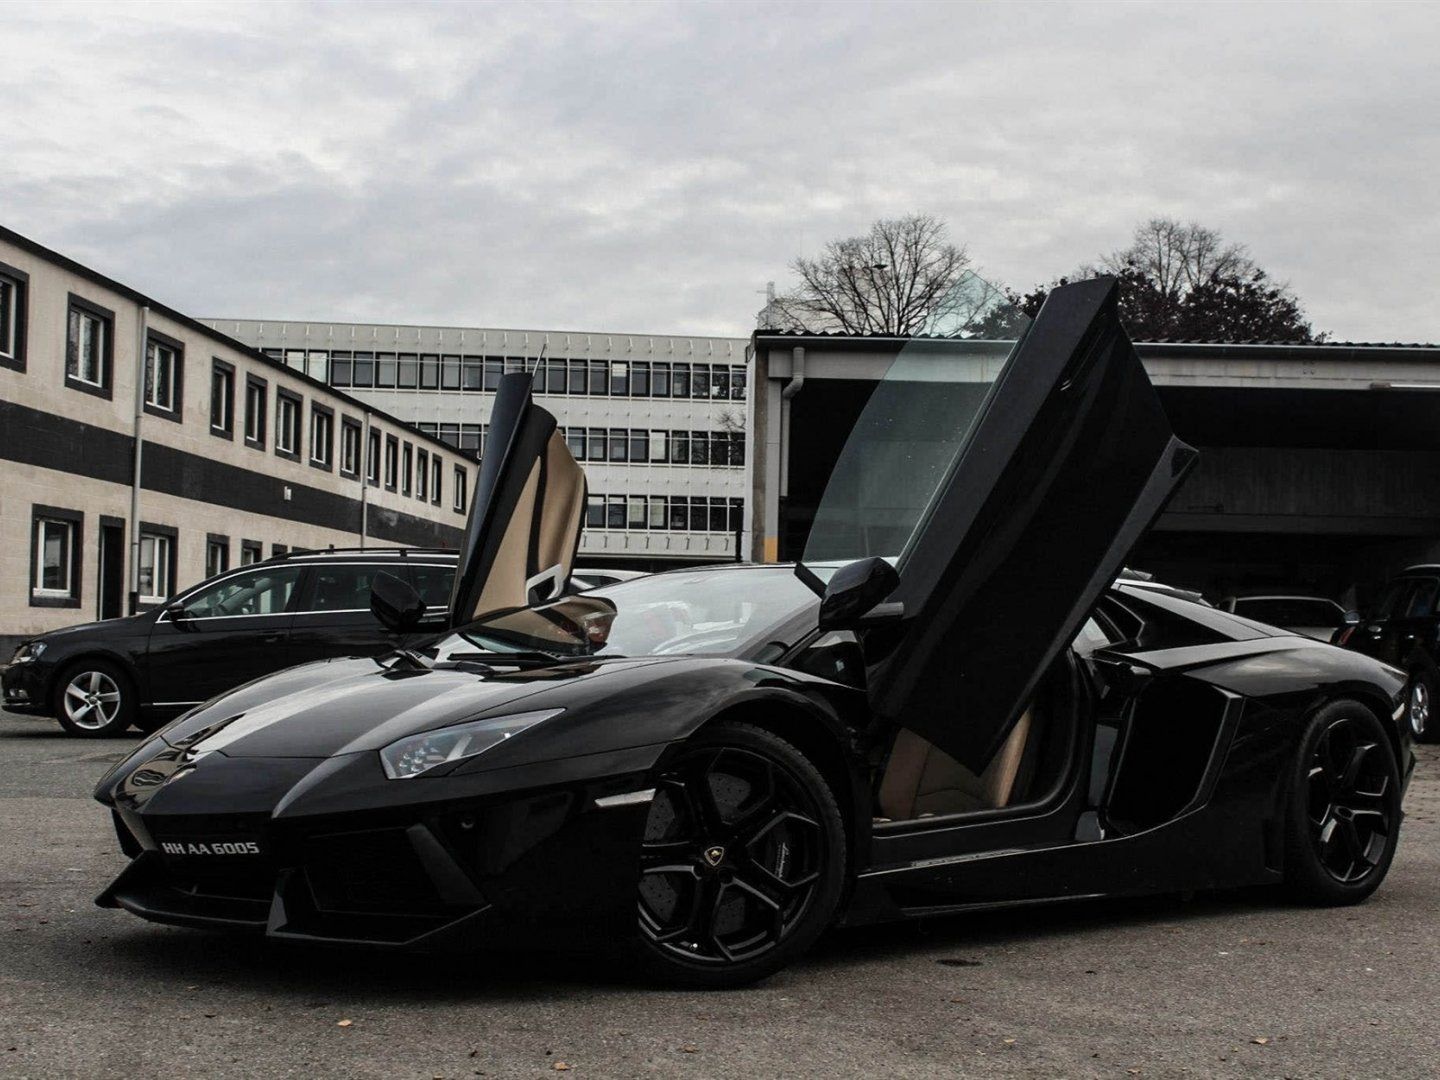 Lamborghini-Aventador-LP700-4-black-supercar-side-view_1600x1200.jpg